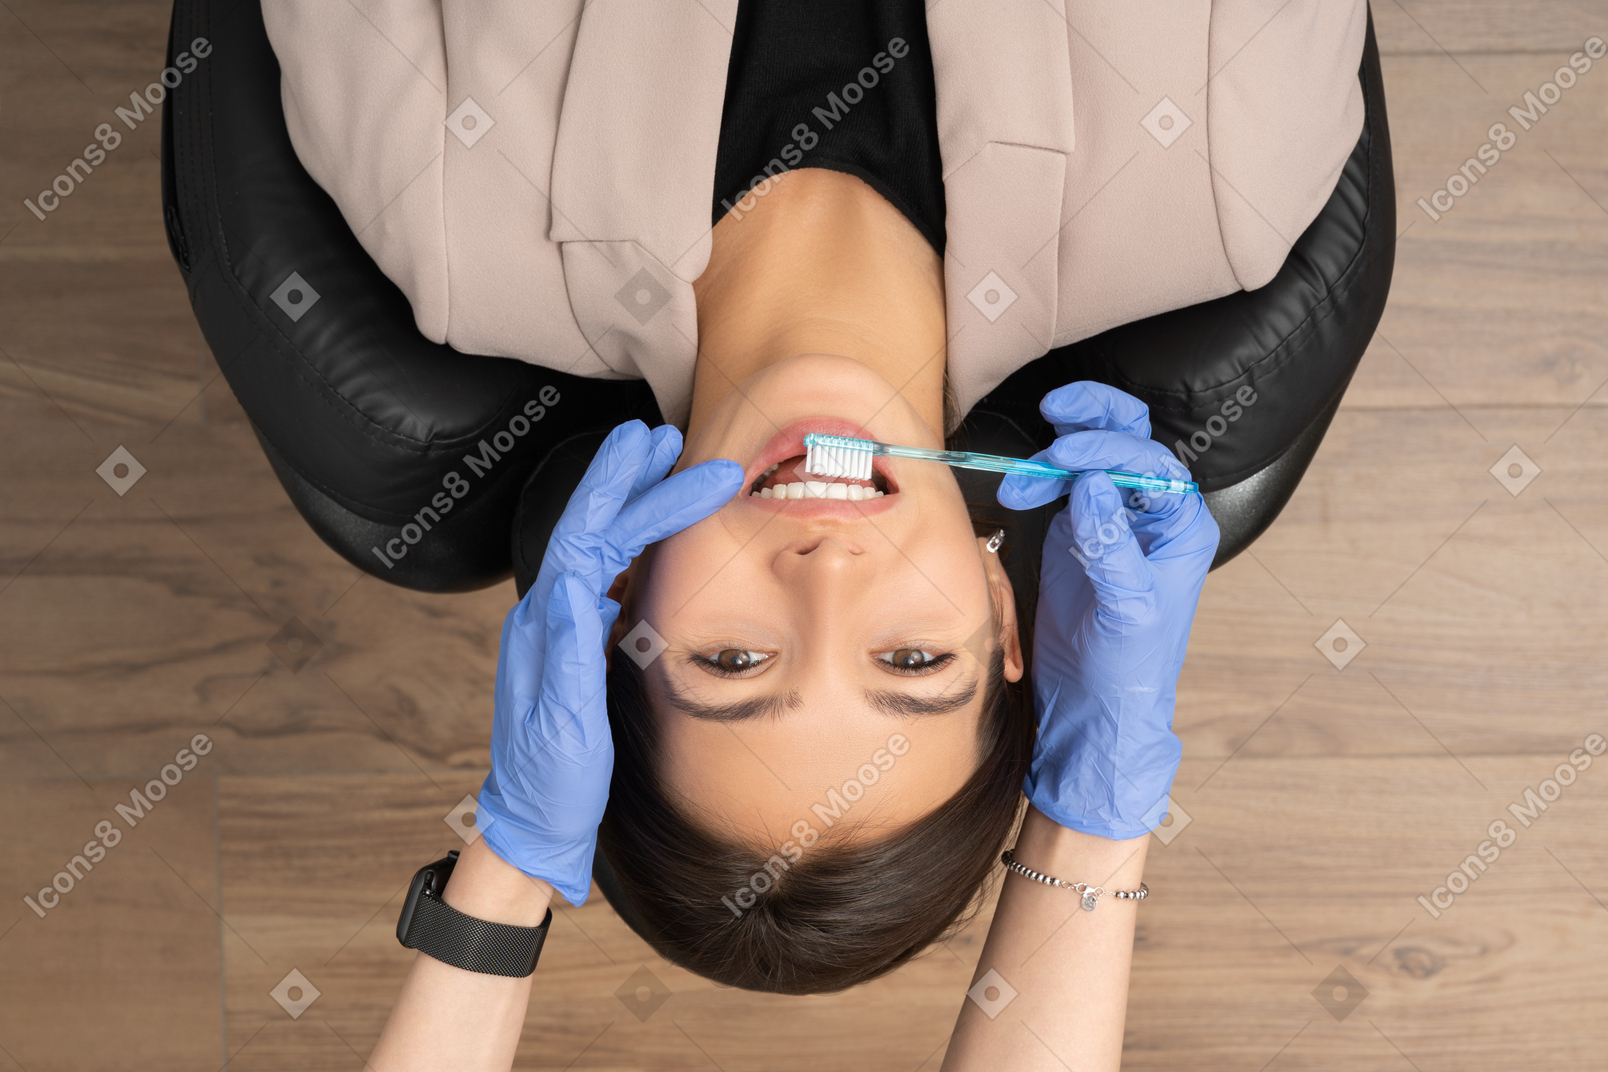 Female at the dentist chair brushing teeth